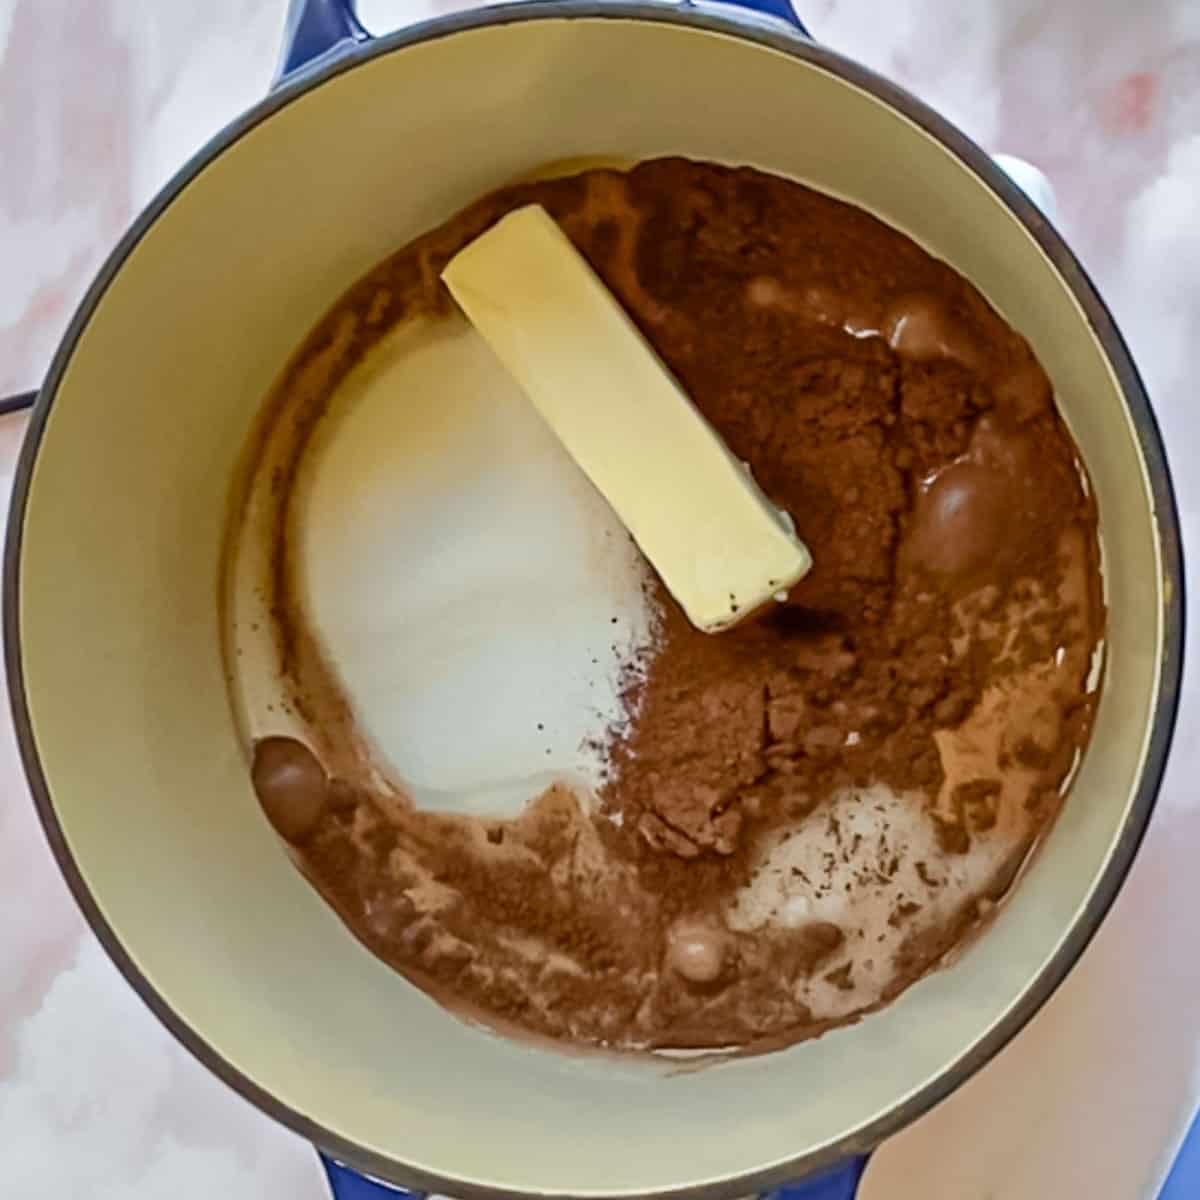 butter, sugar, milk and cocoa in dutch oven